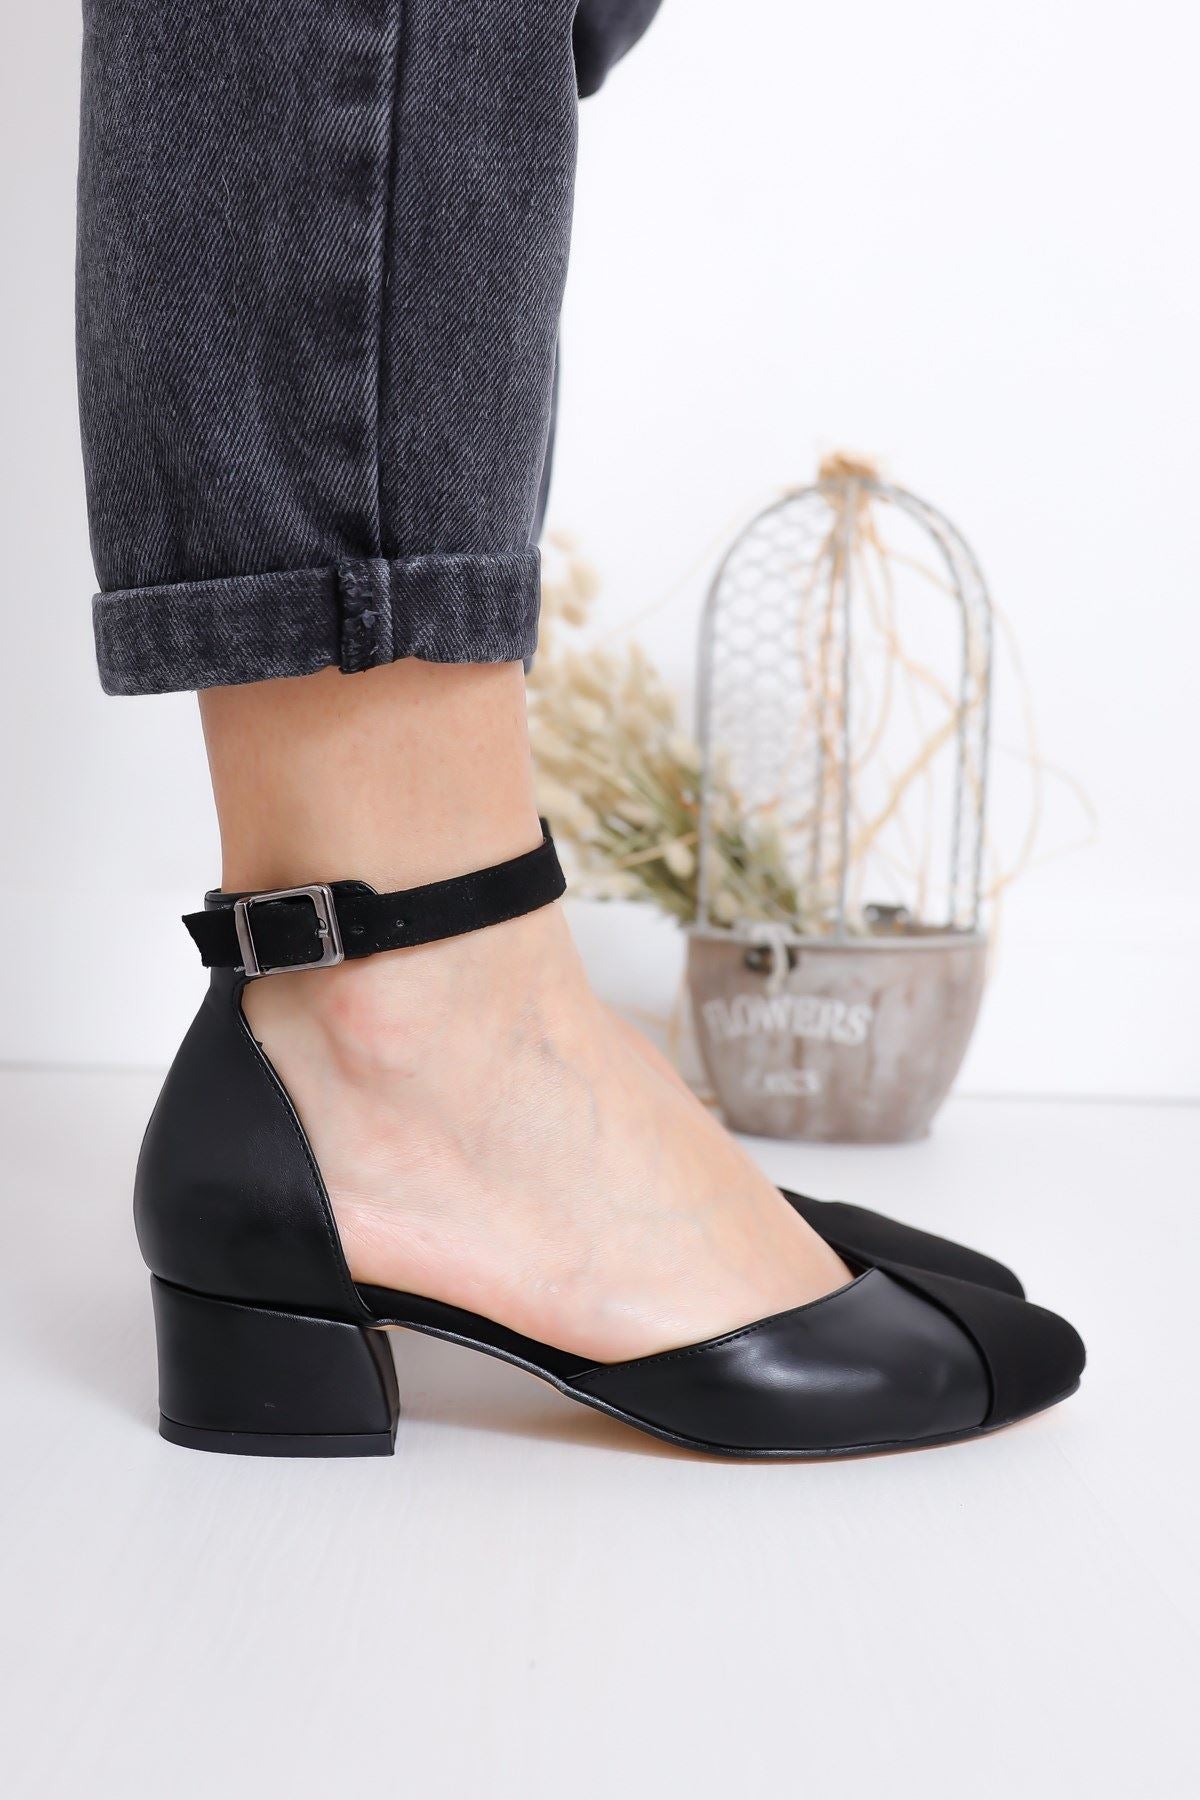 Women's Holly Heels Black Skin-Suede Shoes - STREETMODE ™